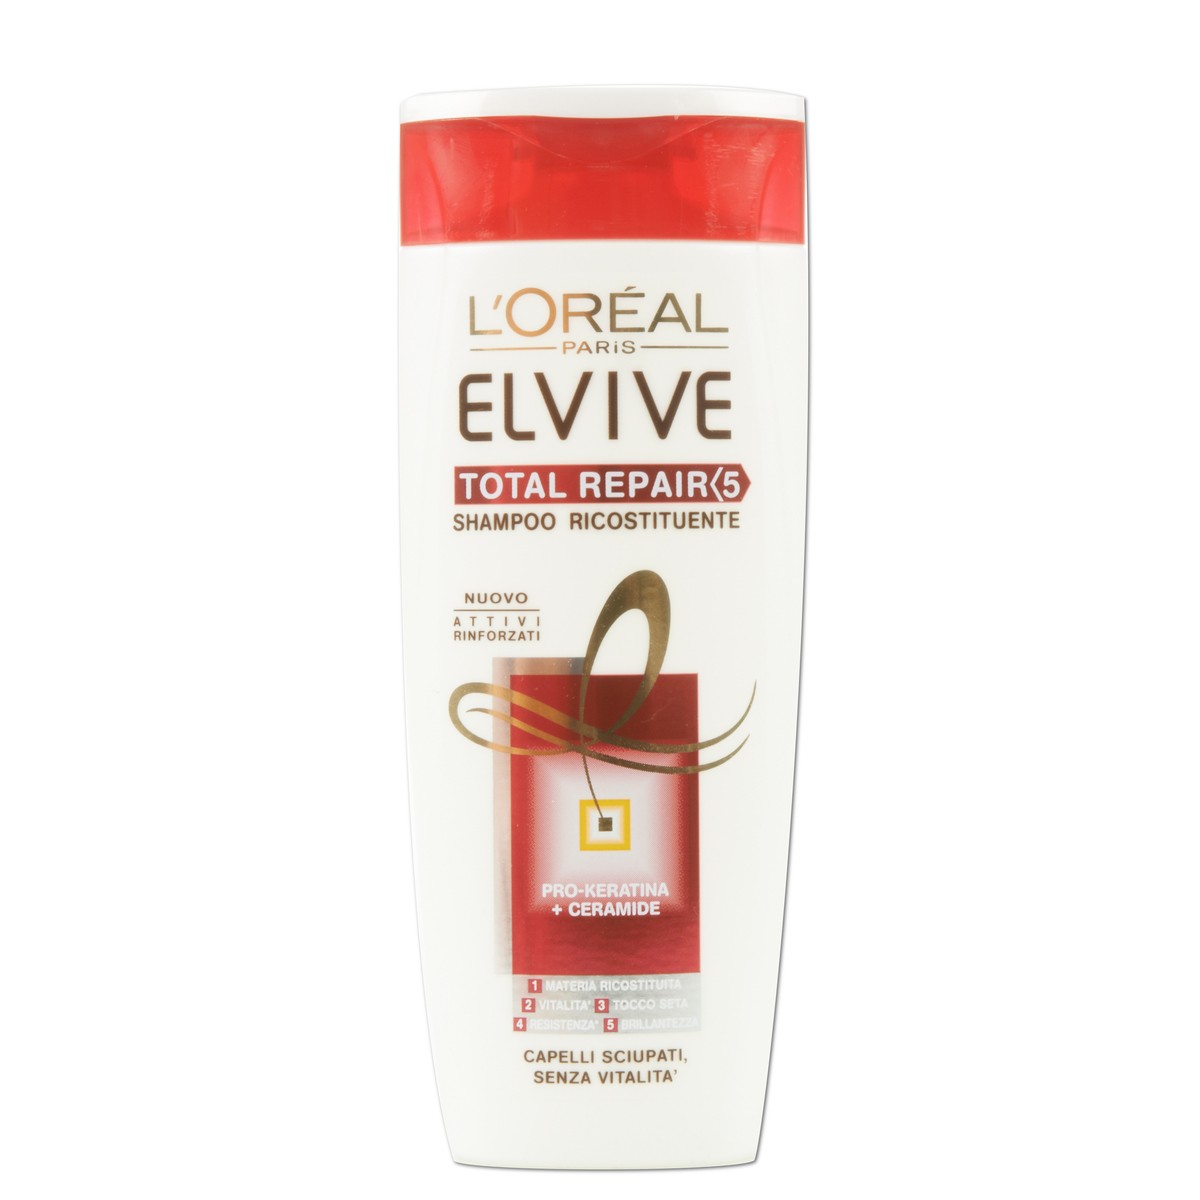 Elvive L'Oréal Paris? Shampoo ricostituente Total Repair 5